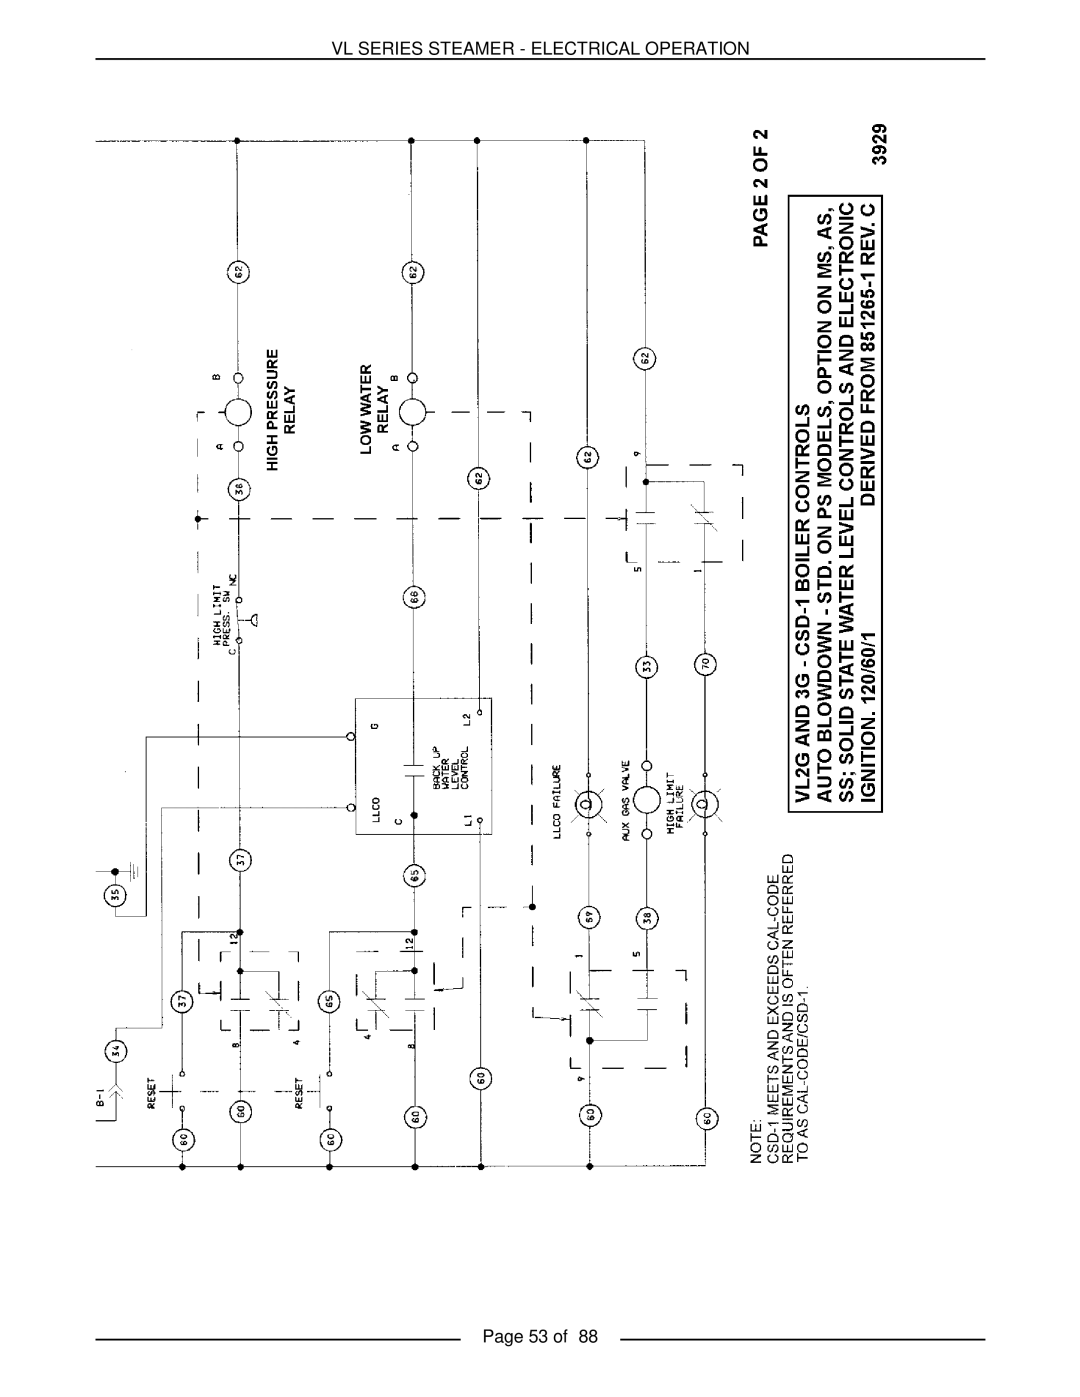 Vulcan-Hart VL3GSS, VL3GMS, VL2GMS, VL3GAS, VL2GAS, VL2GSS, VL3GPS, VL2GPS Vl Series Steamer - Electrical Operation, Page 53 of 